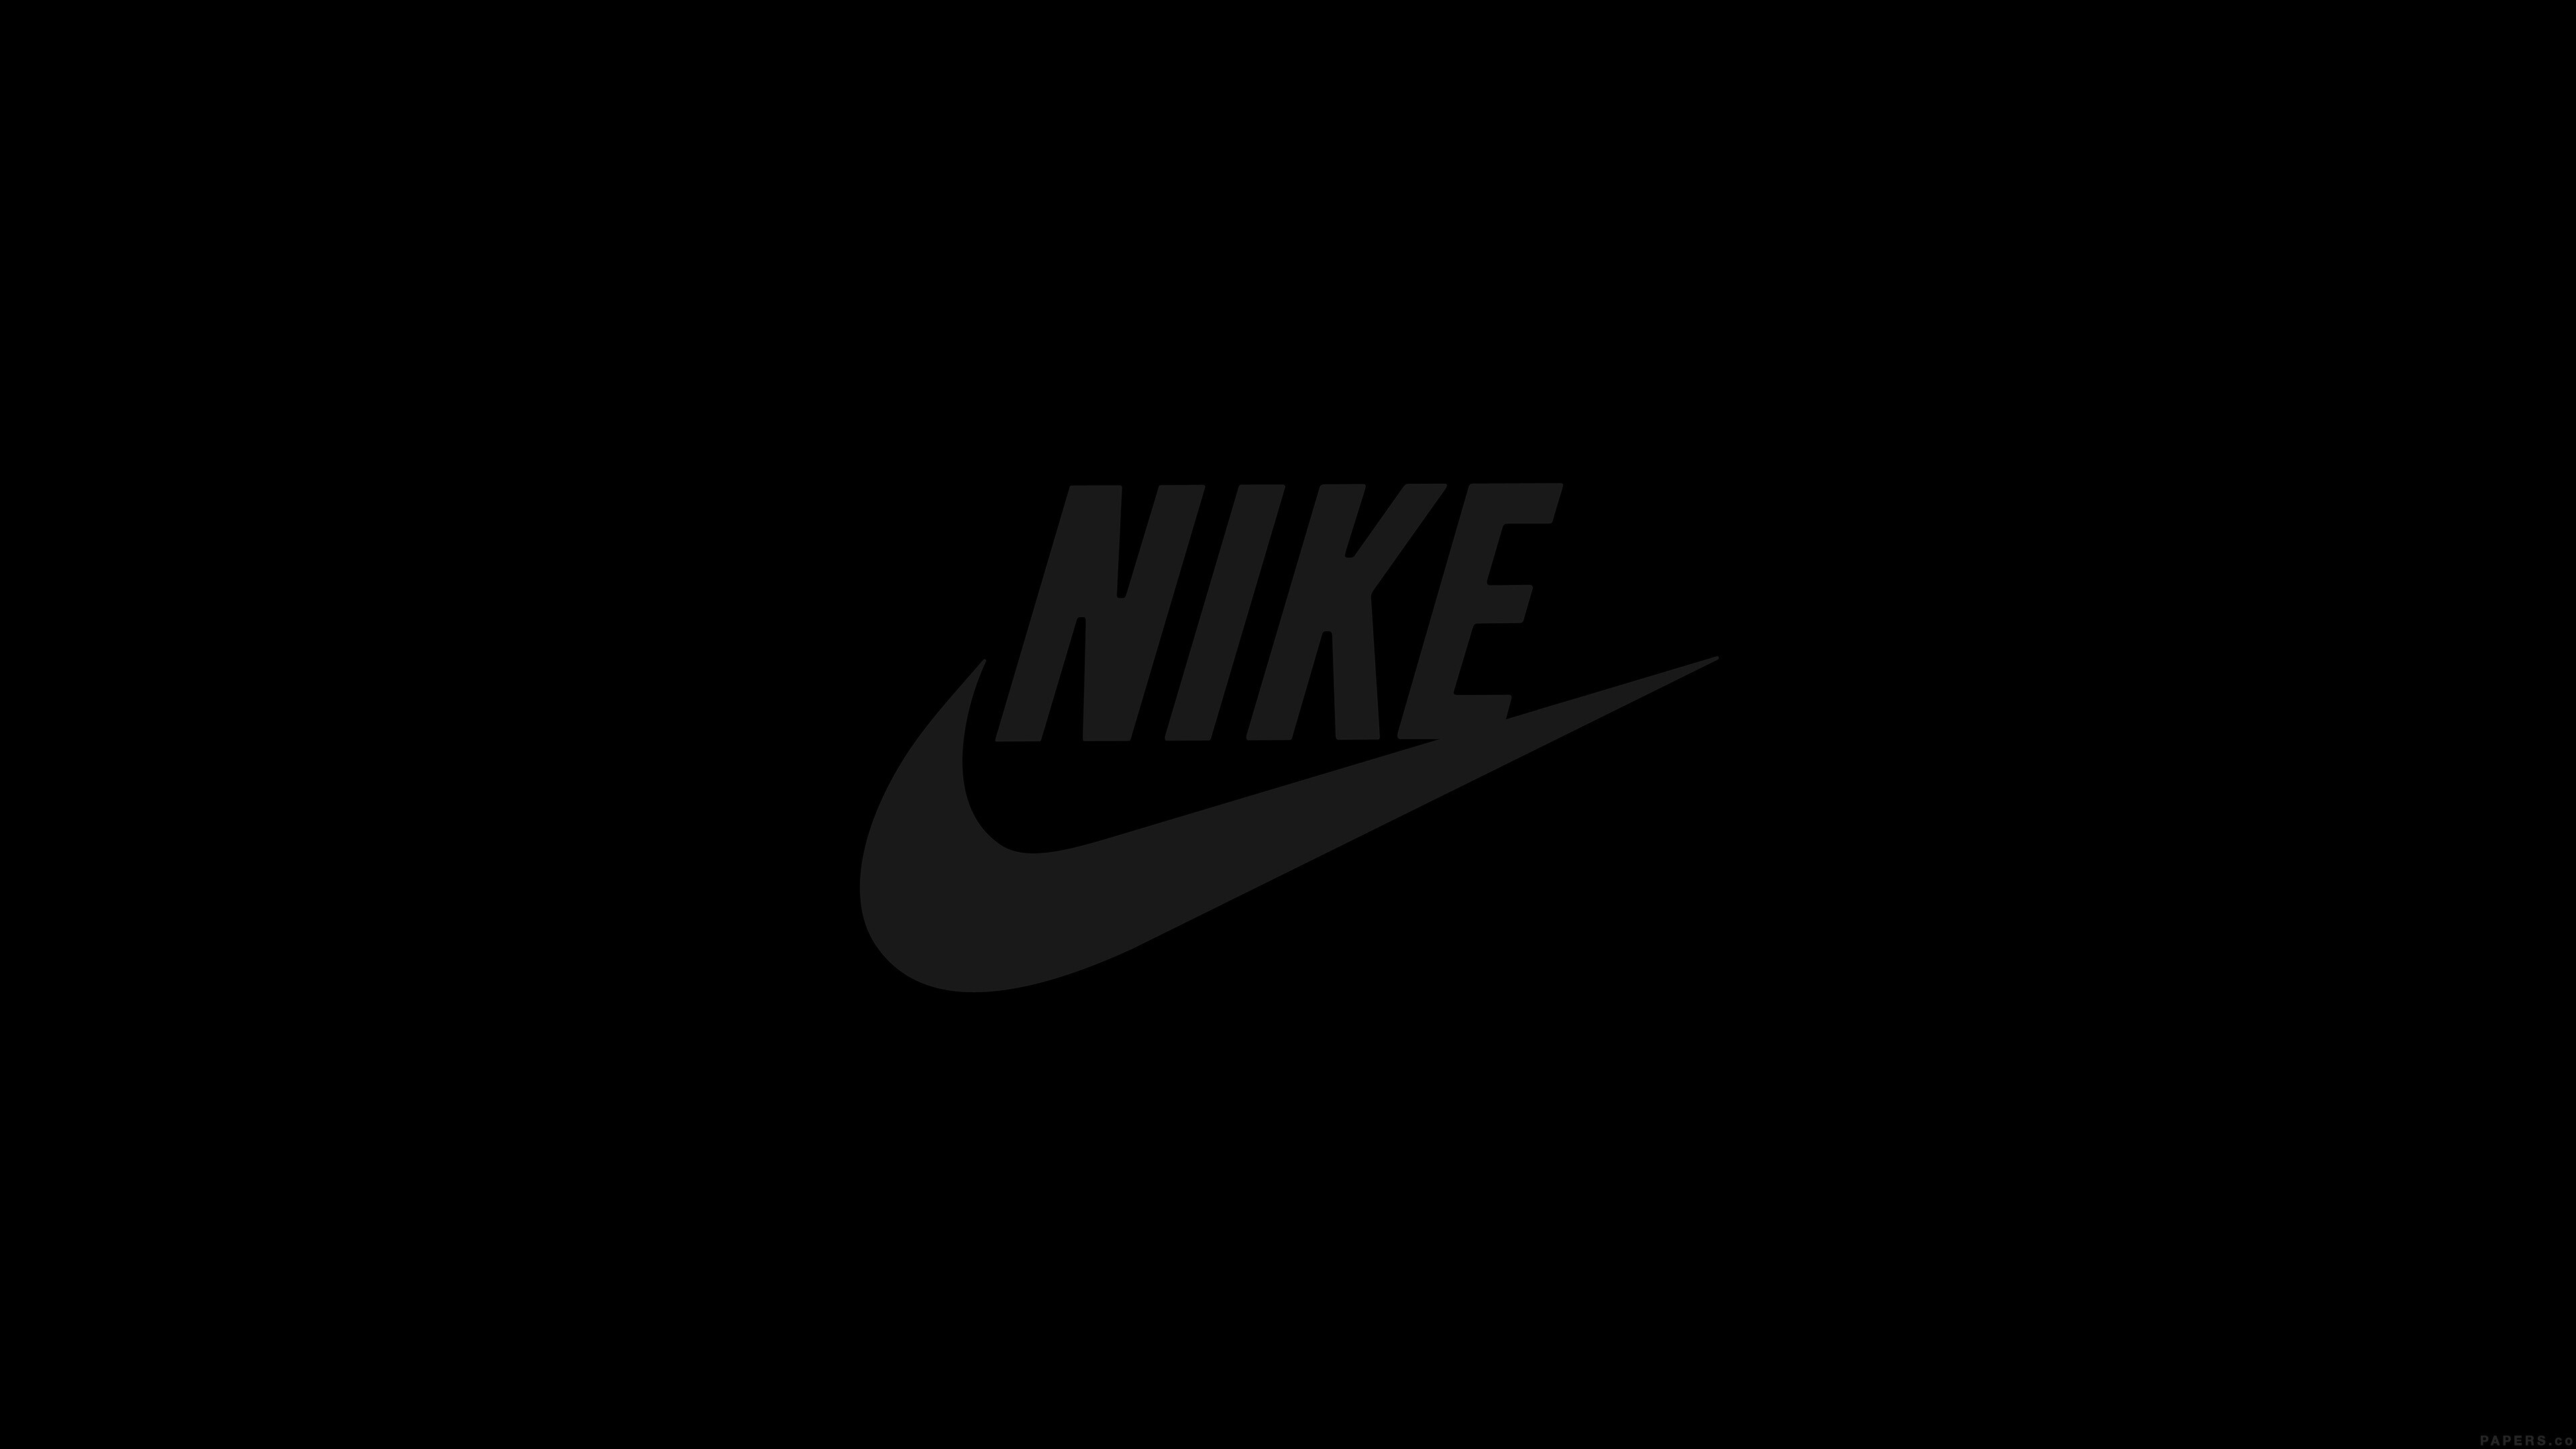 Nike: Swoosh corporate trademark, created in 1971 by Carolyn Davidson. 3840x2160 4K Wallpaper.